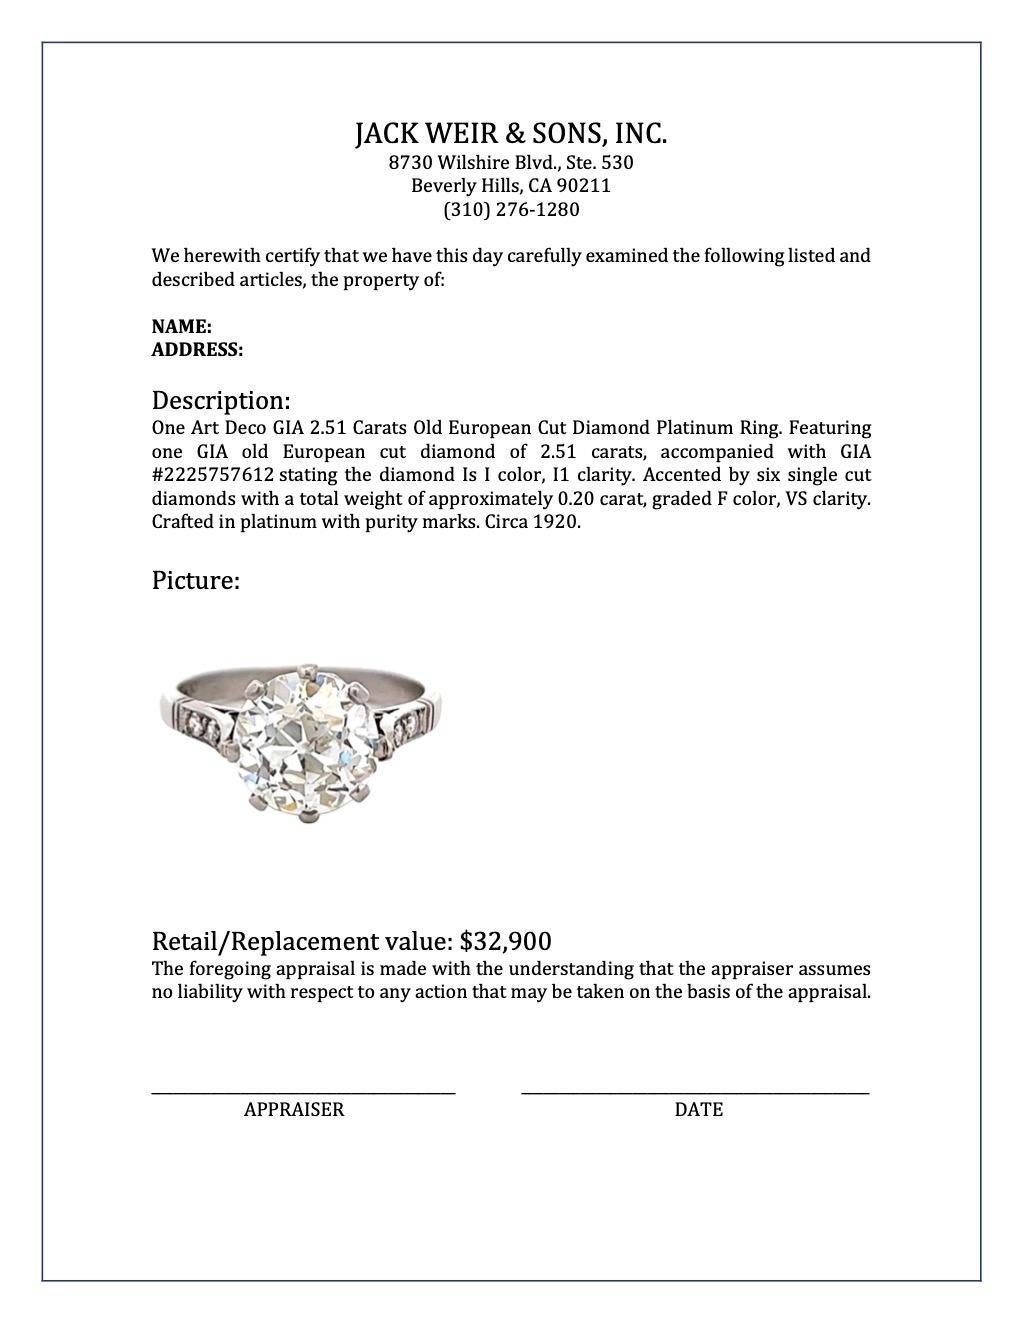 Art Deco GIA 2.51 Carats Old European Cut Diamond Platinum Ring 4